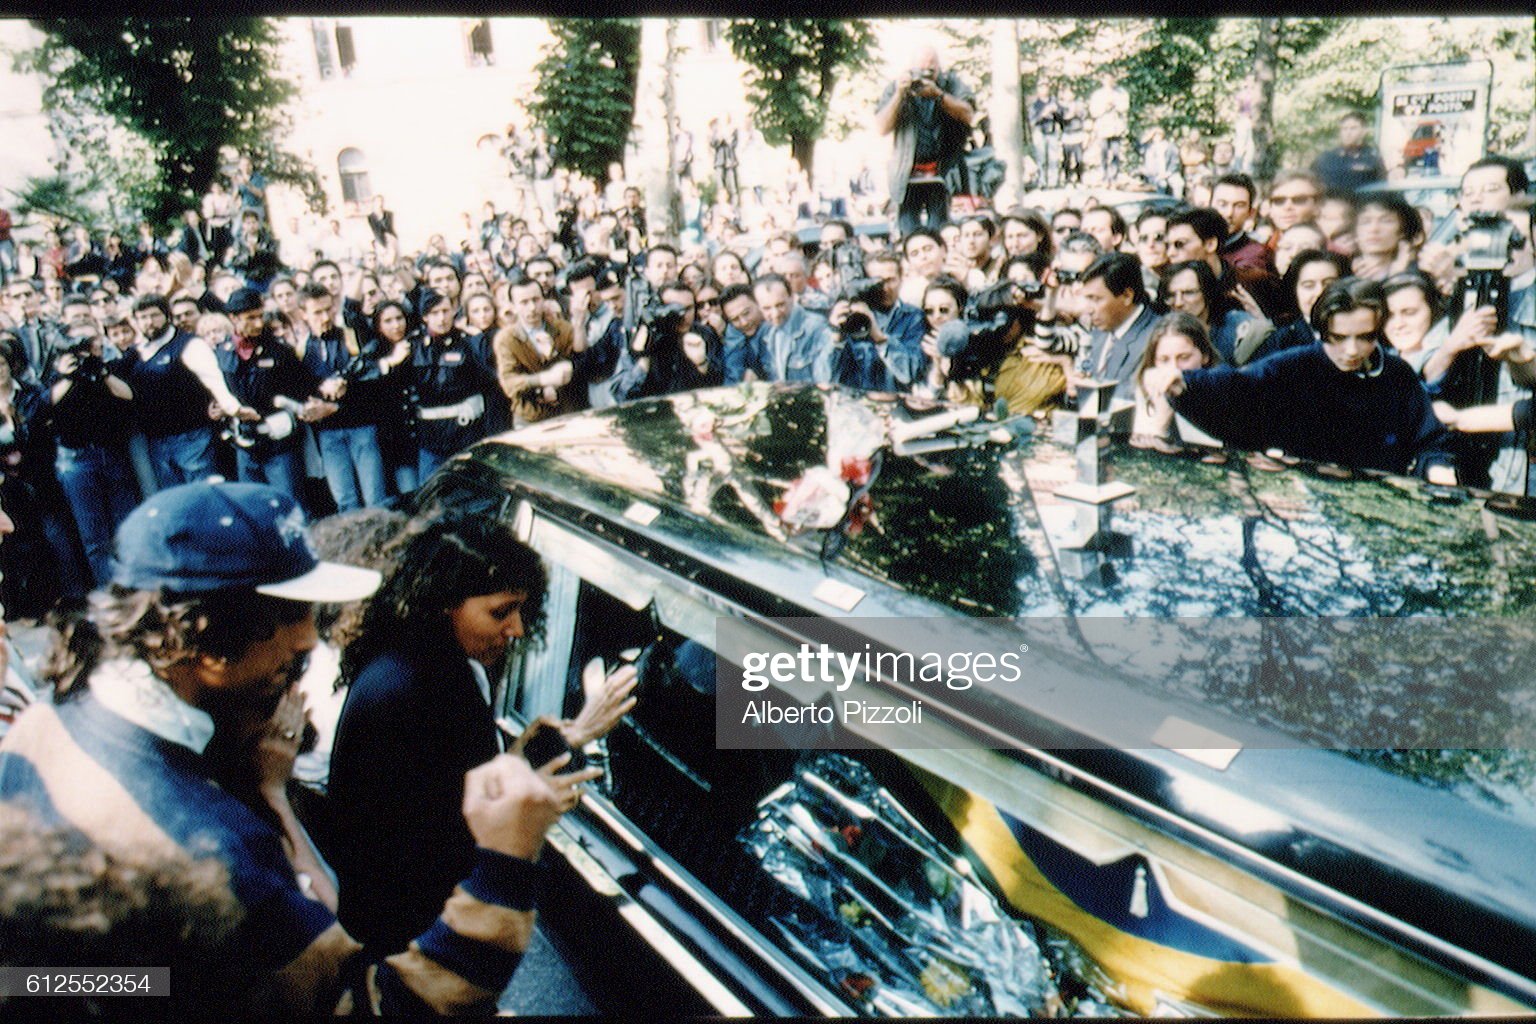 Ayrton Senna's coffin.